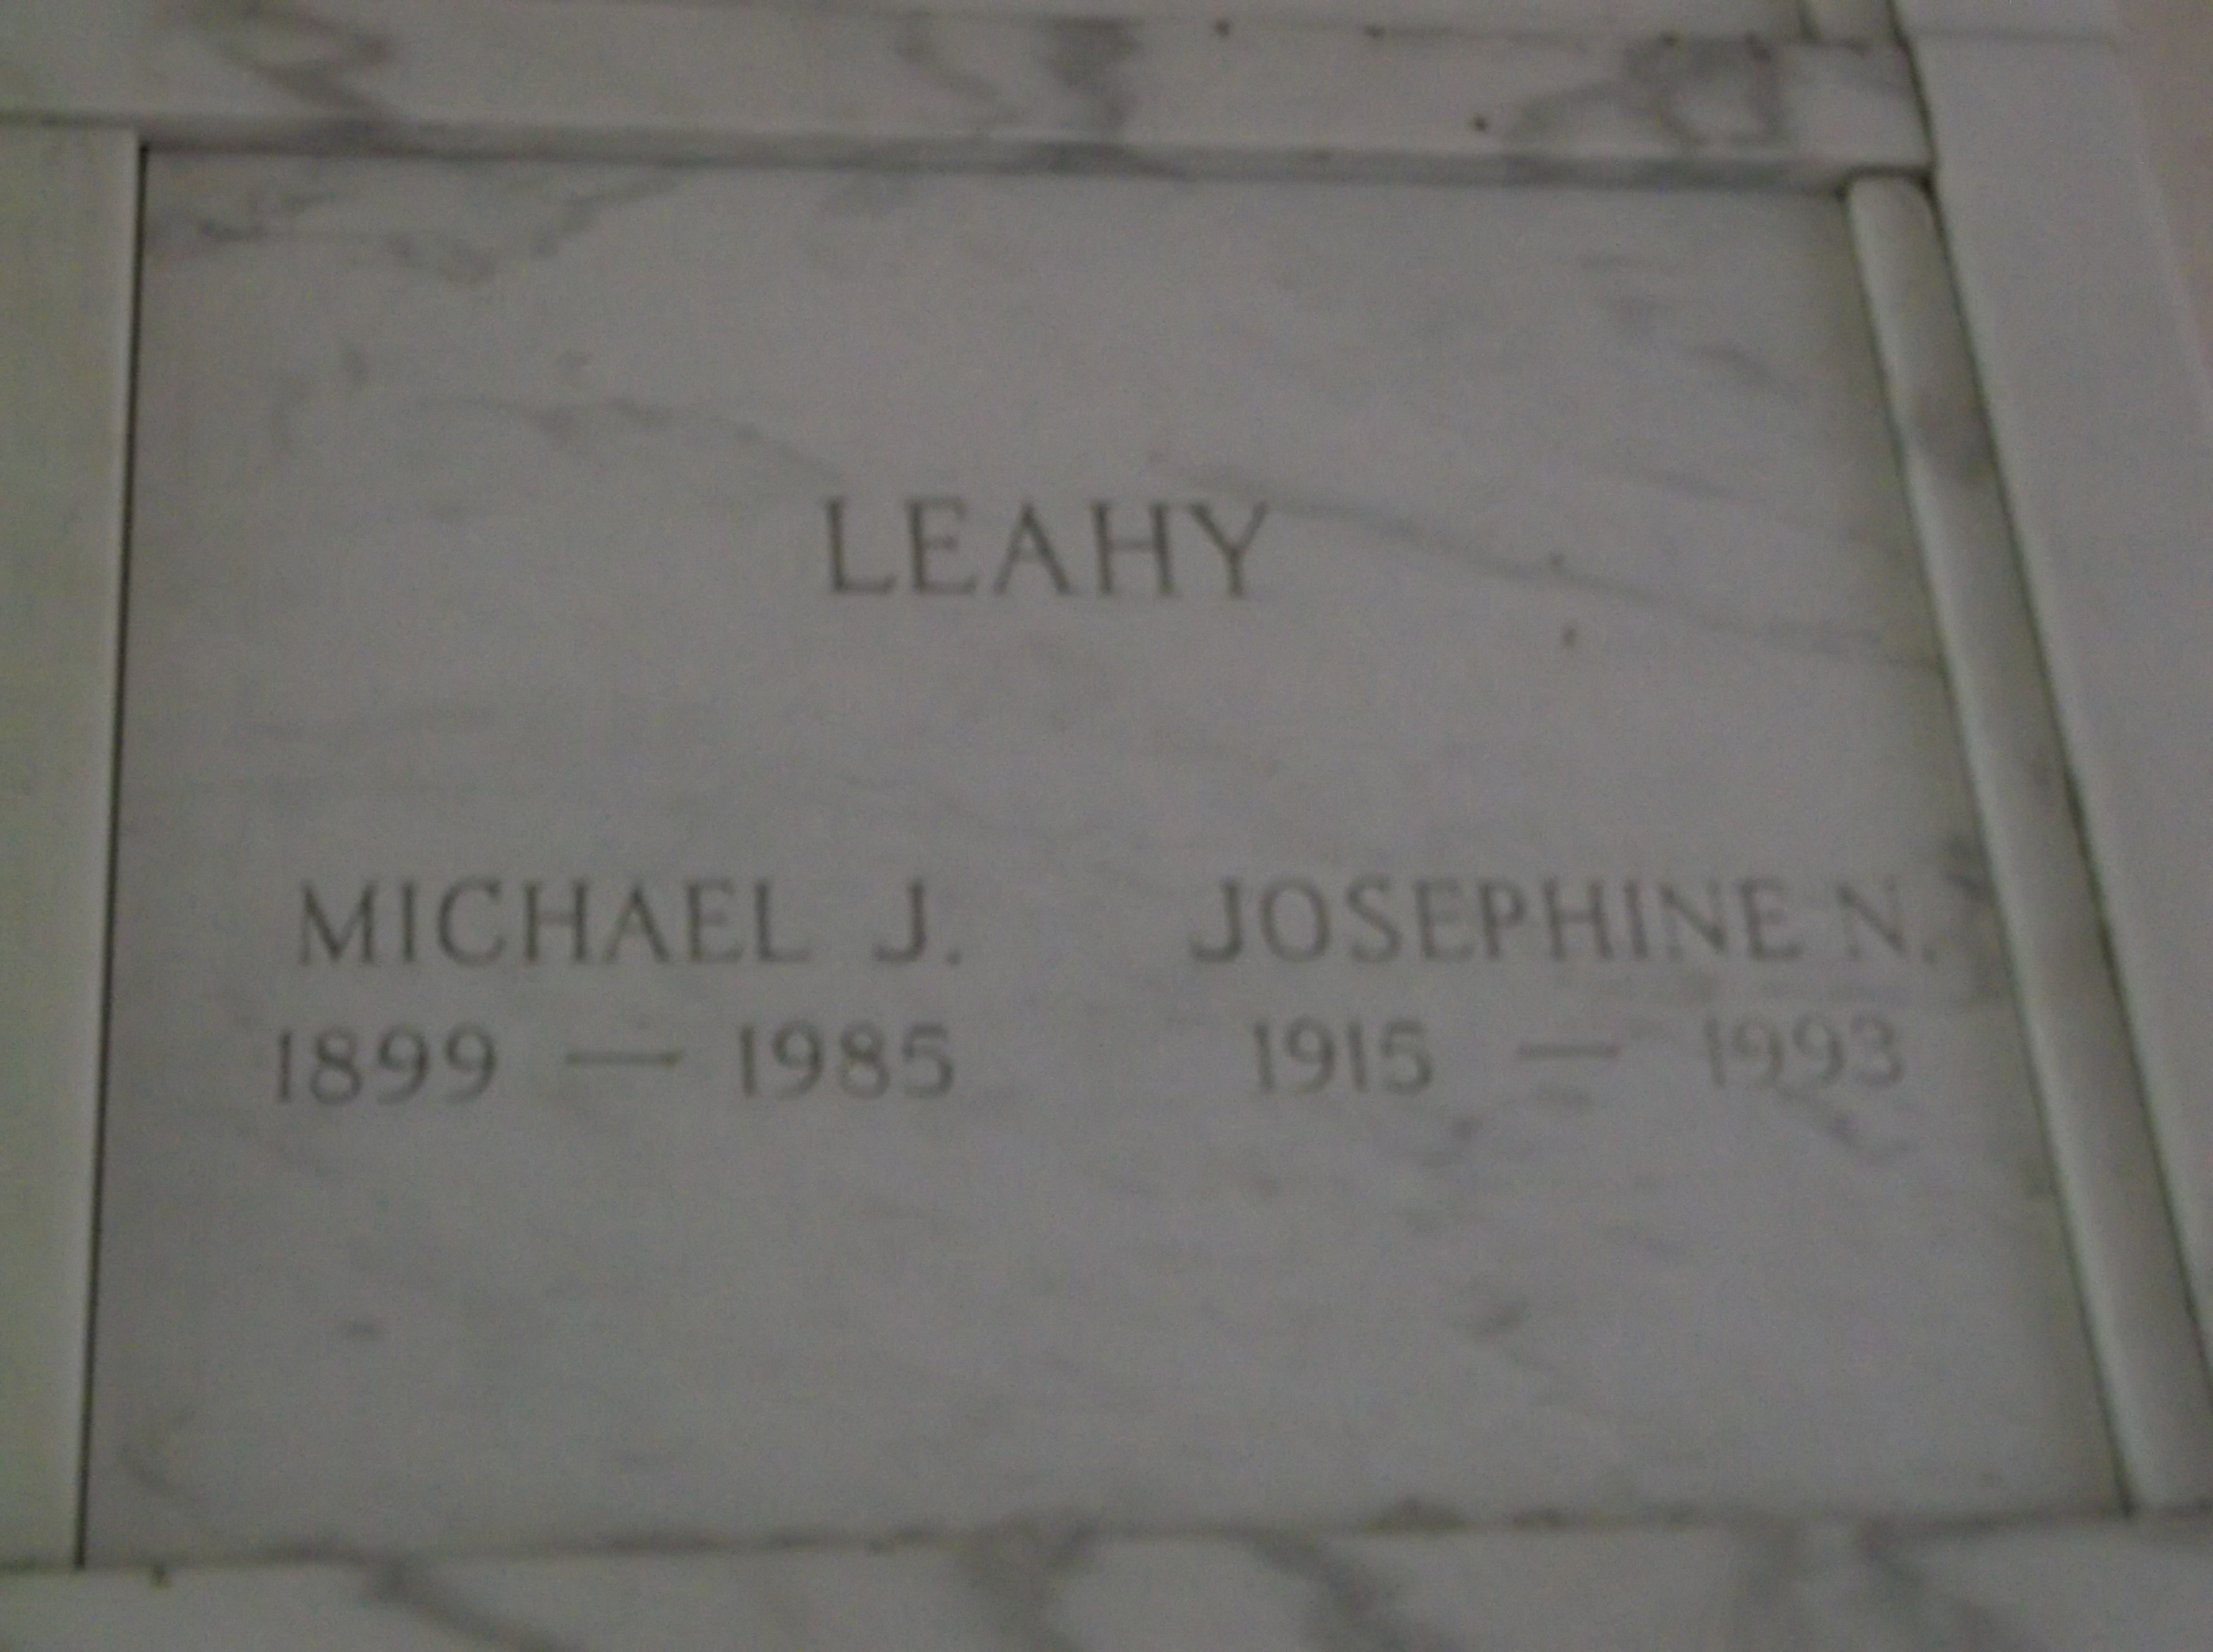 Michael J Leahy